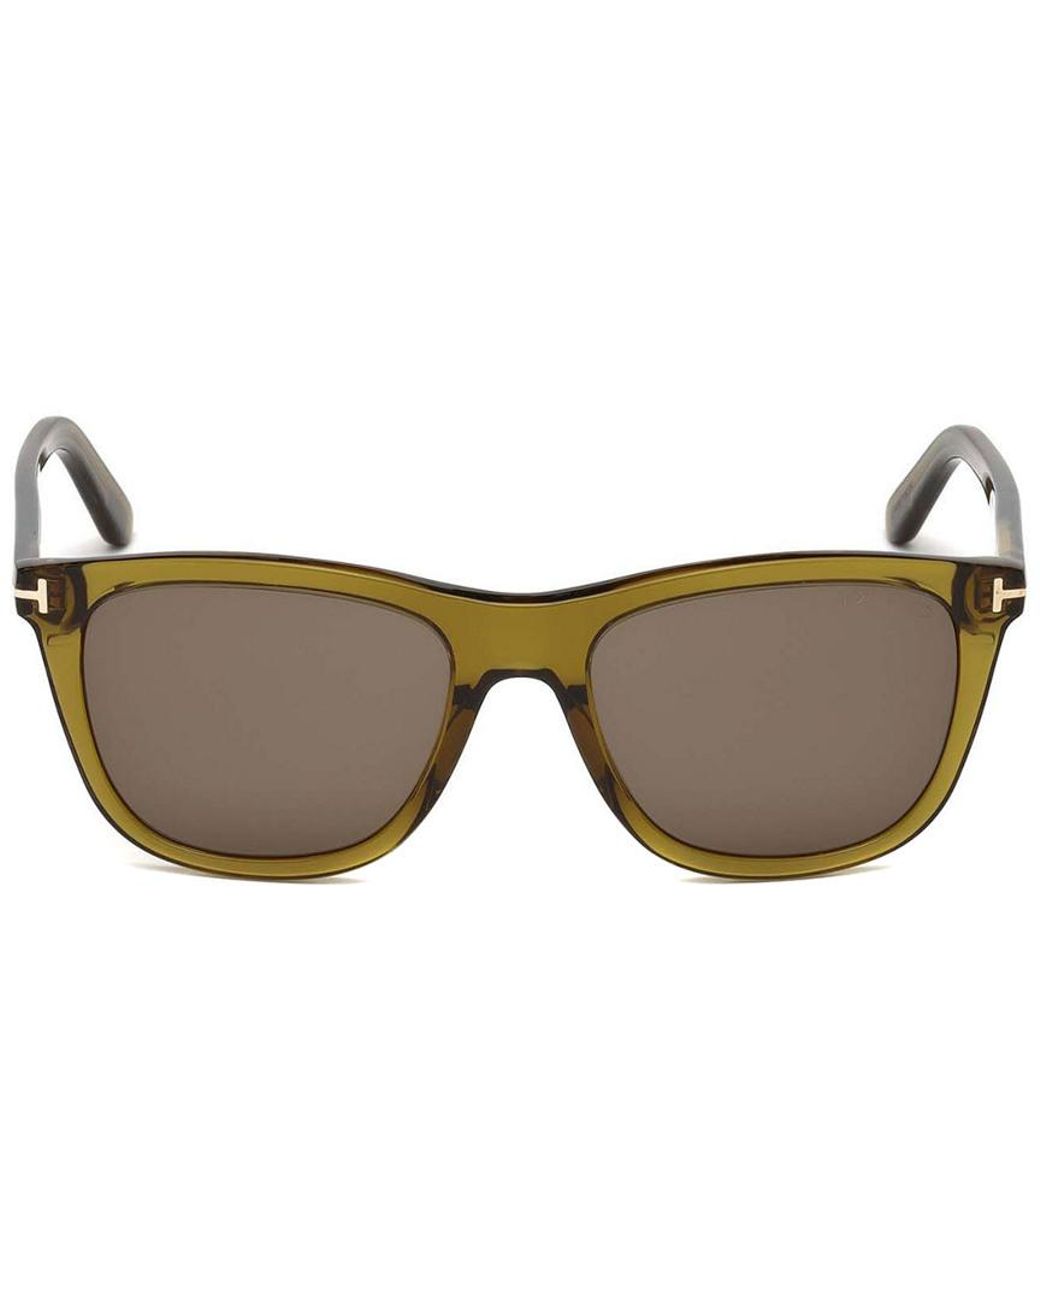 Tom Ford TF500 Andrew Black/Tortoise Prescription Sunglasses